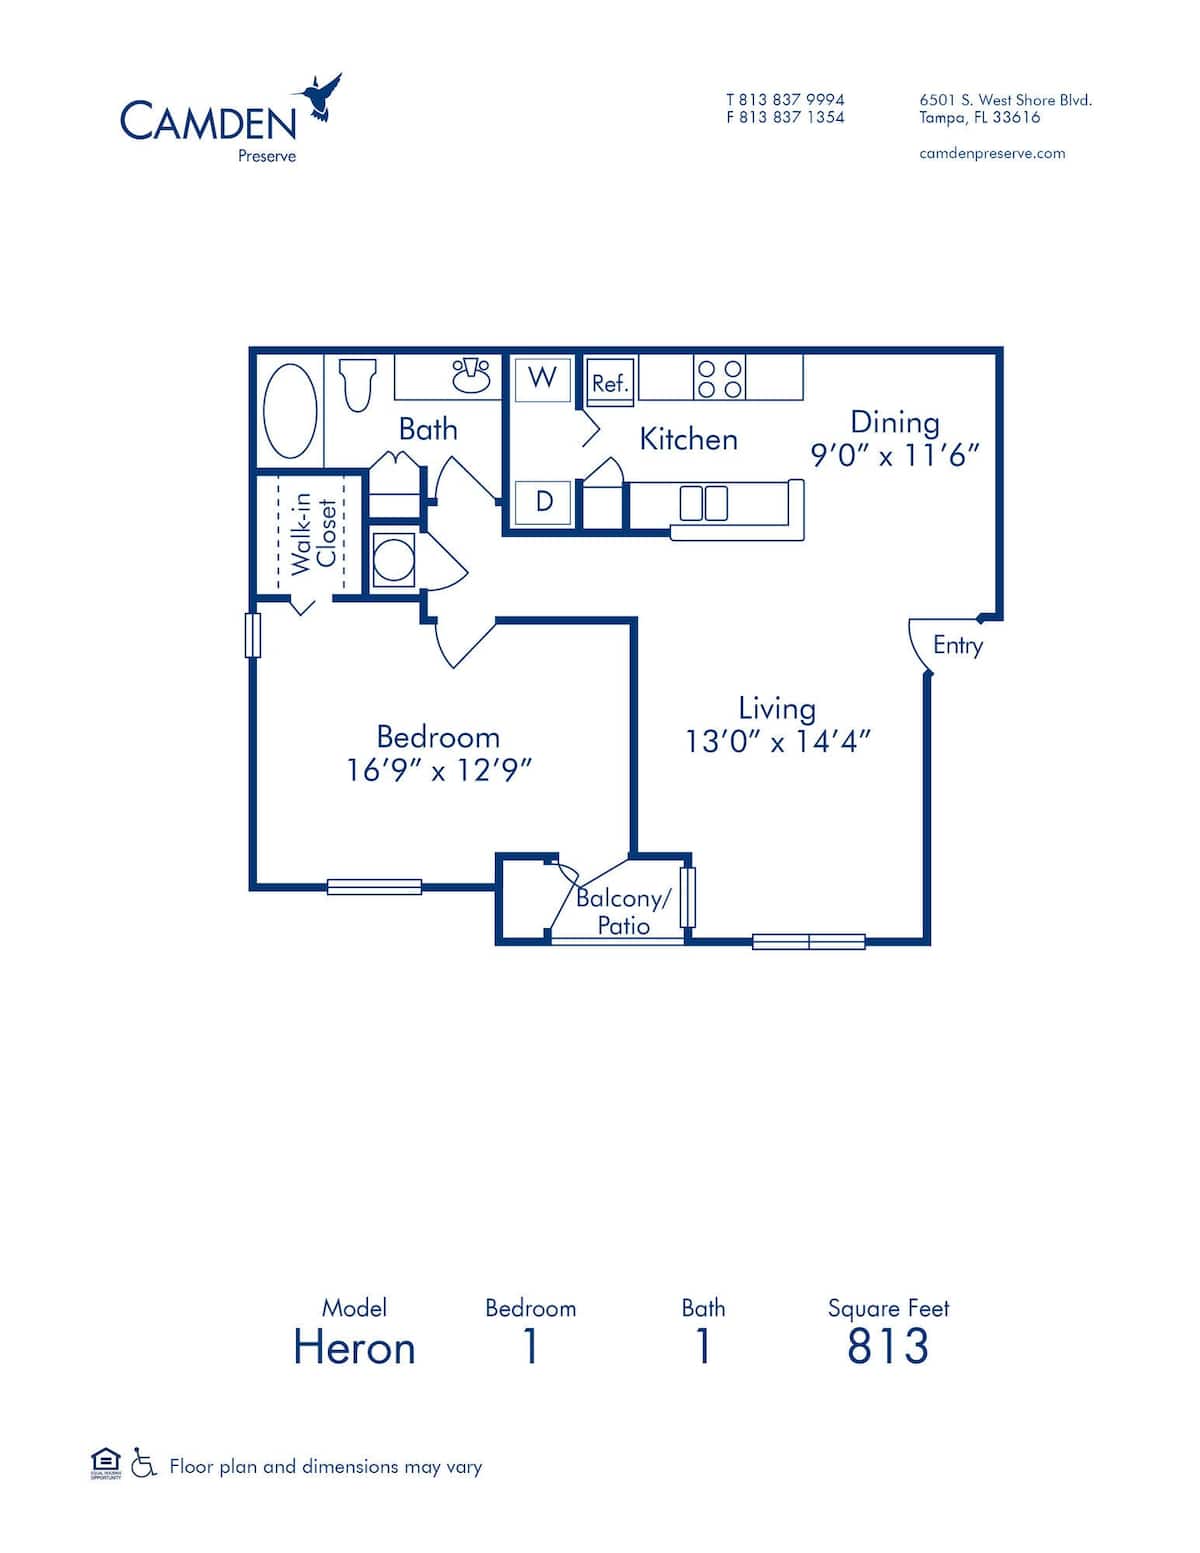 Floorplan diagram for Heron, showing 1 bedroom